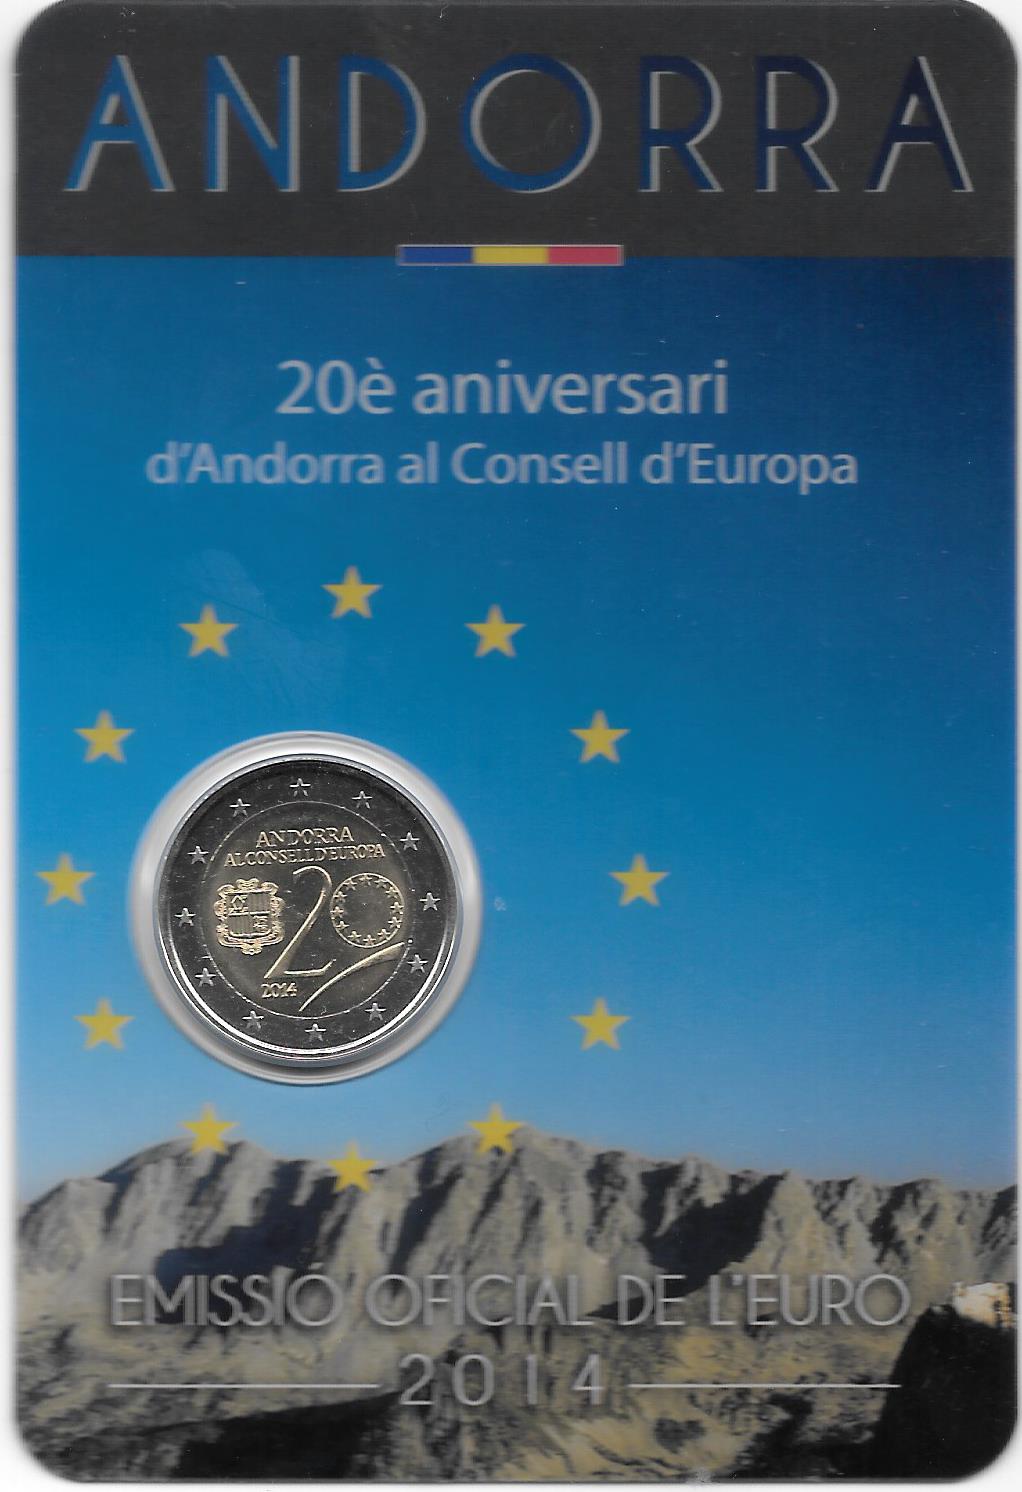 "20 Anniversario d'Andorra al Consiglio d'Europa" - moneta da 2 euro in blister